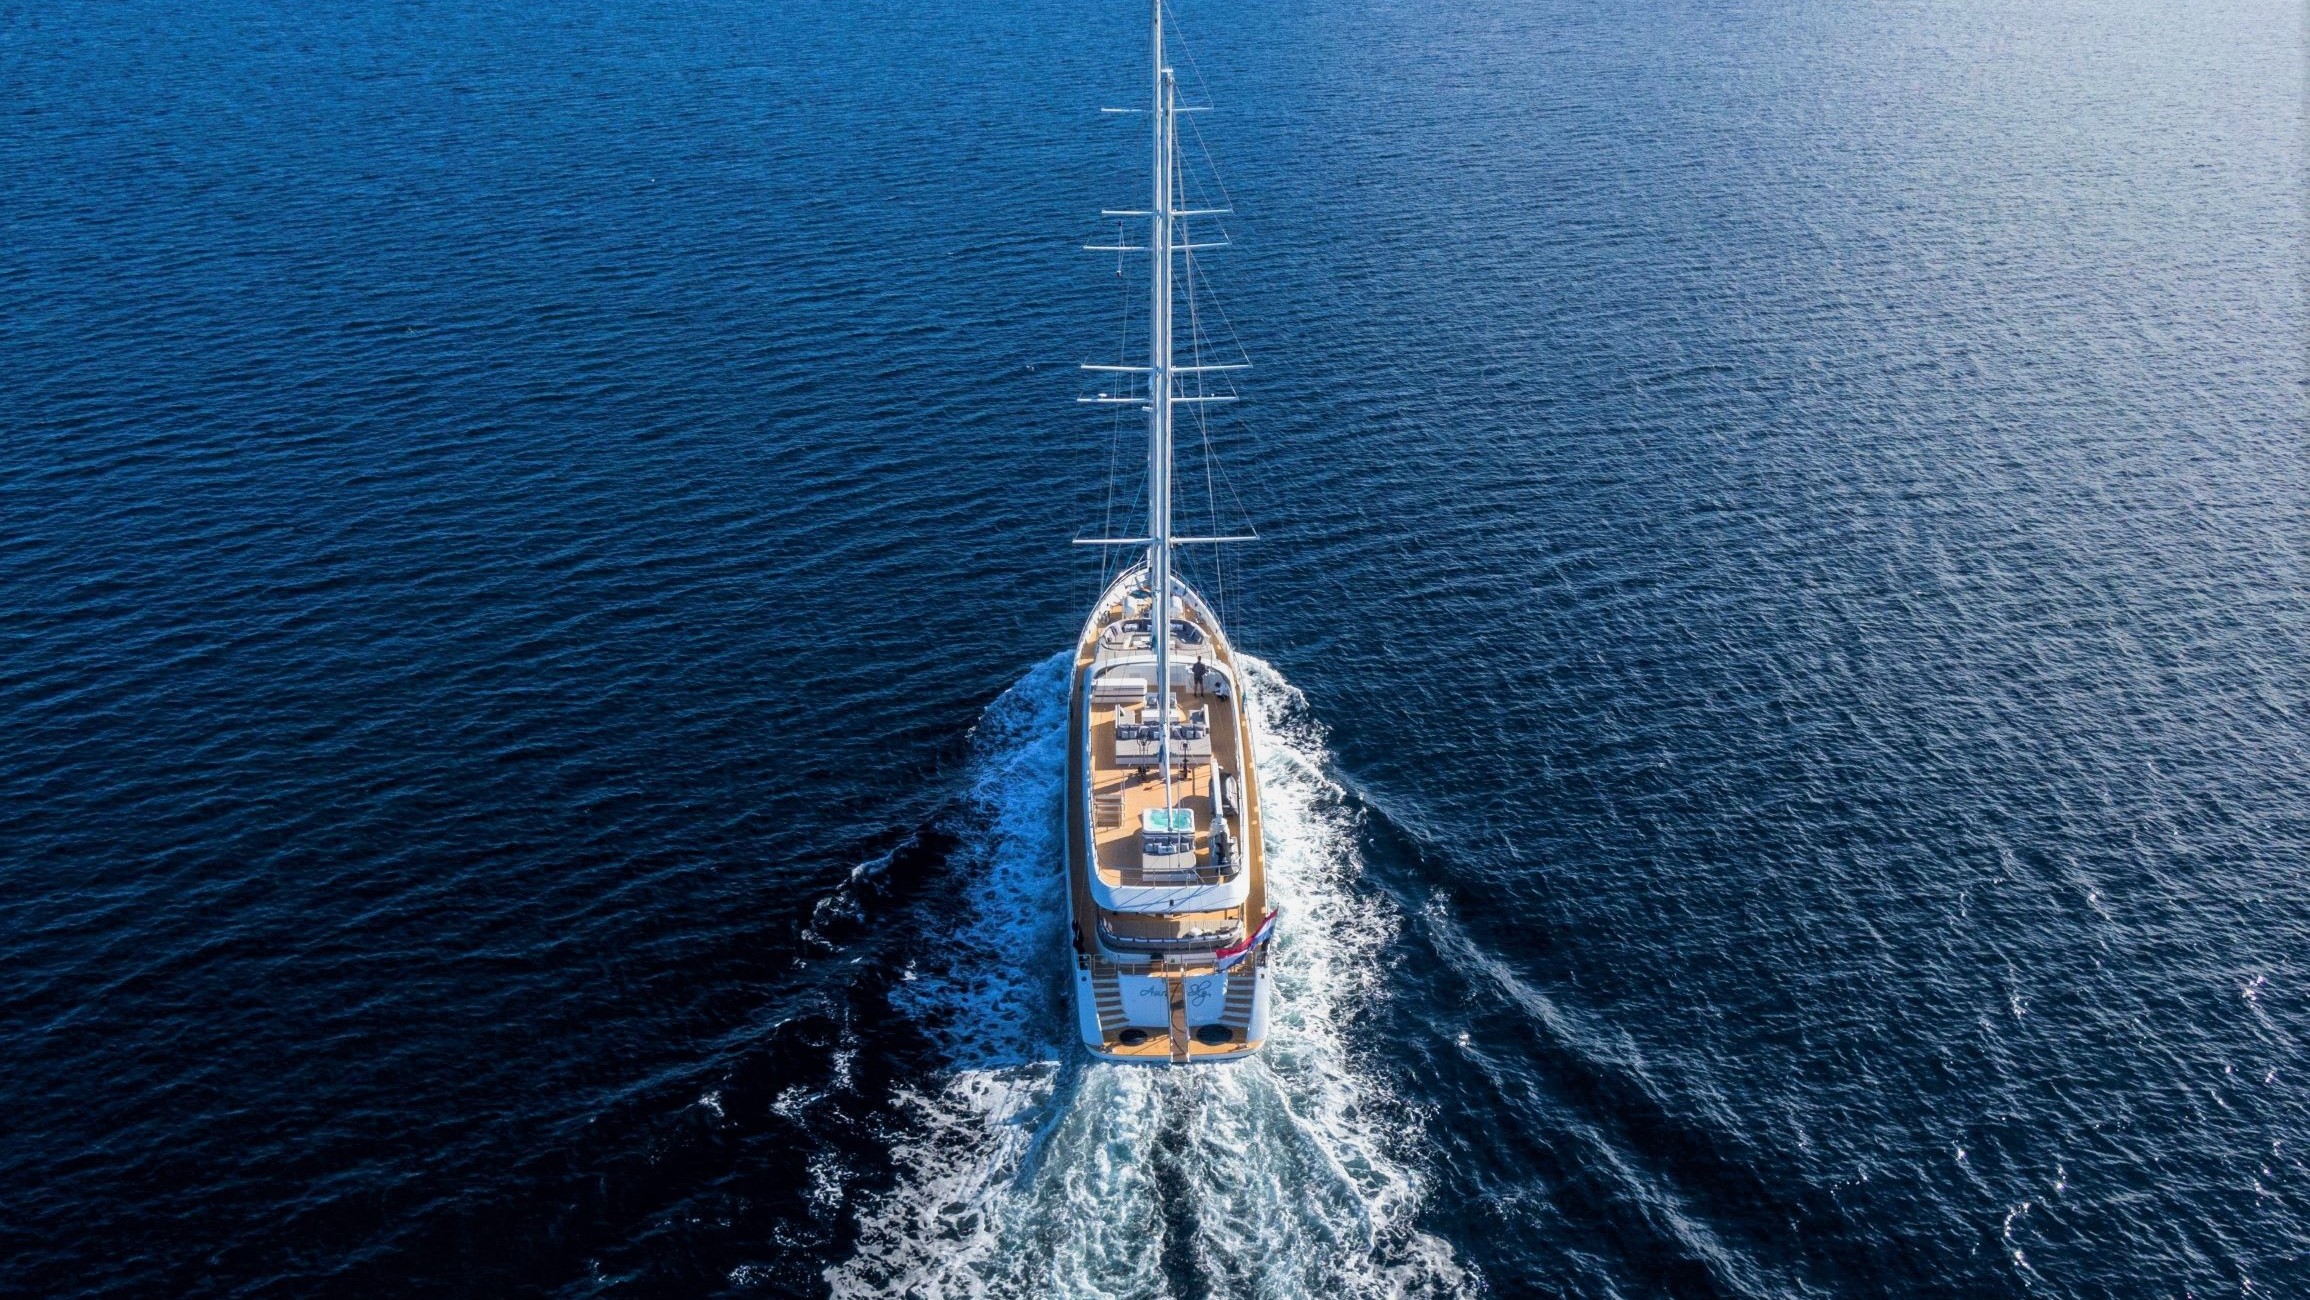 Aurum Sky sailing yacht - cruising the Adriatic Sea near Croatia - aerial view.